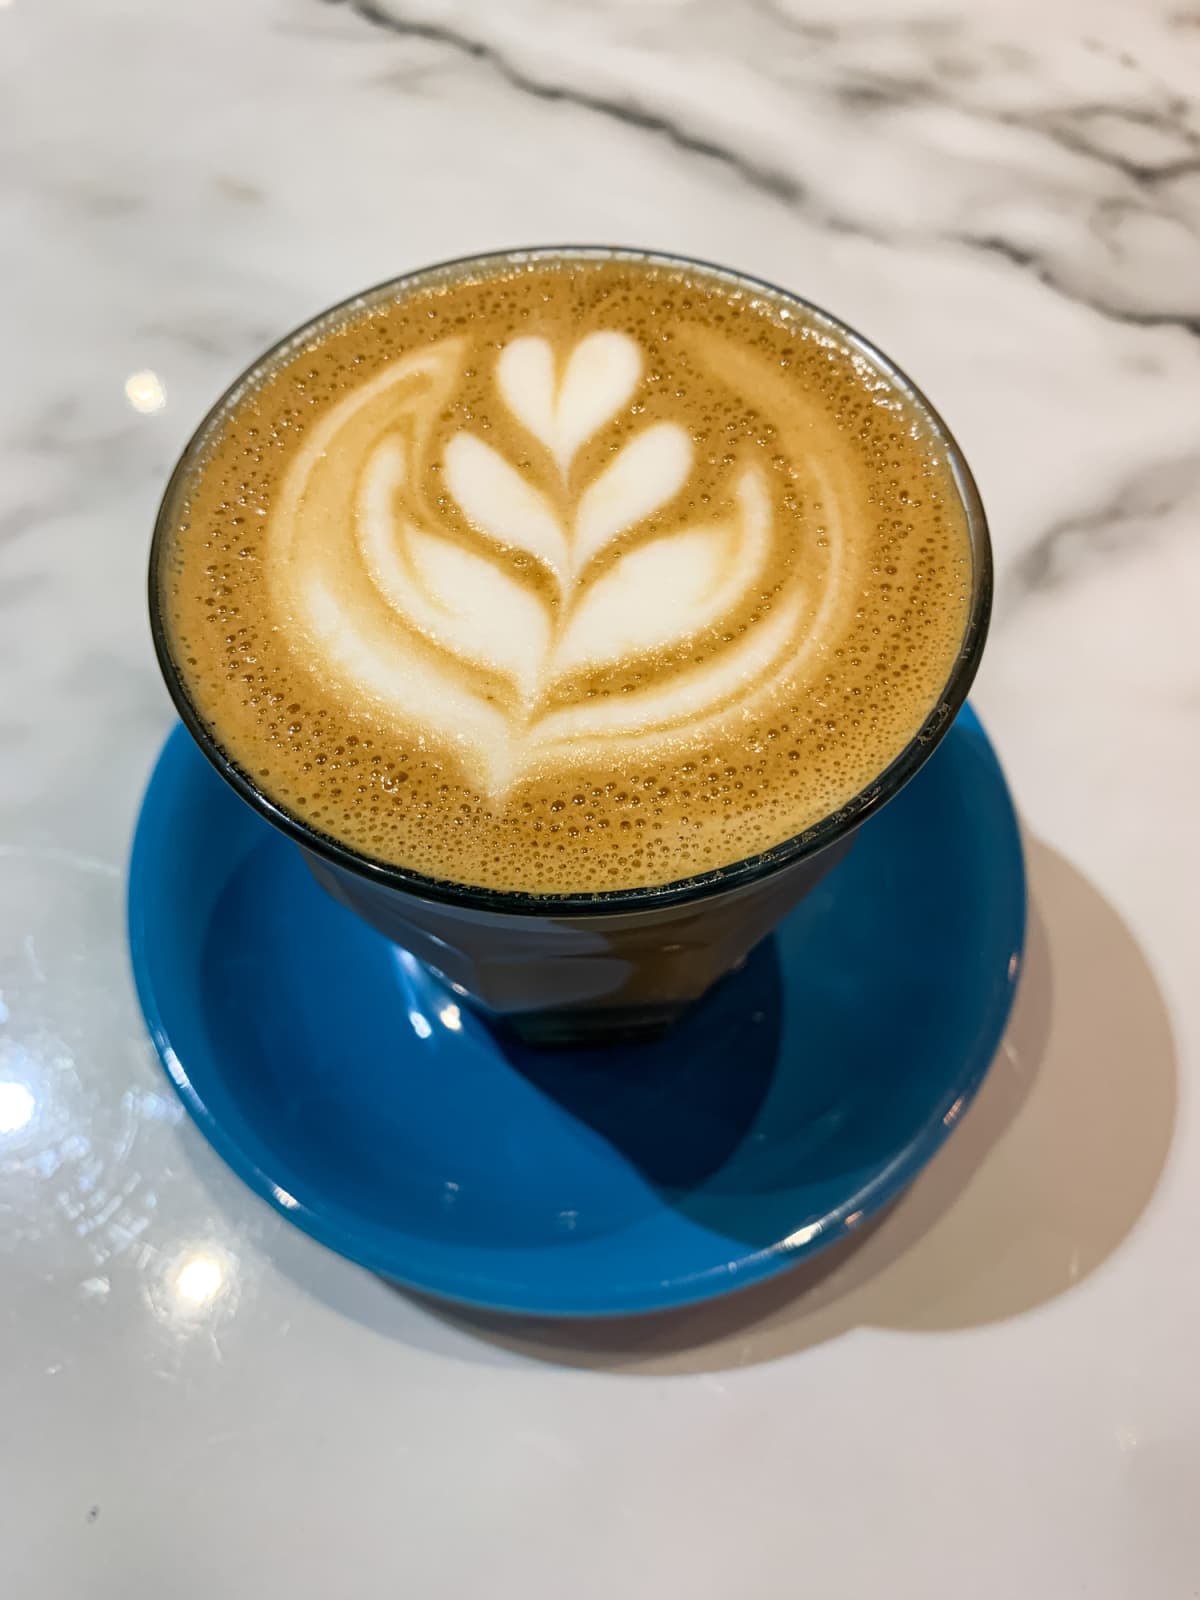 A mug of flat white coffee on a marble background. Coffee art. Heart flower shape latte art. Copy space